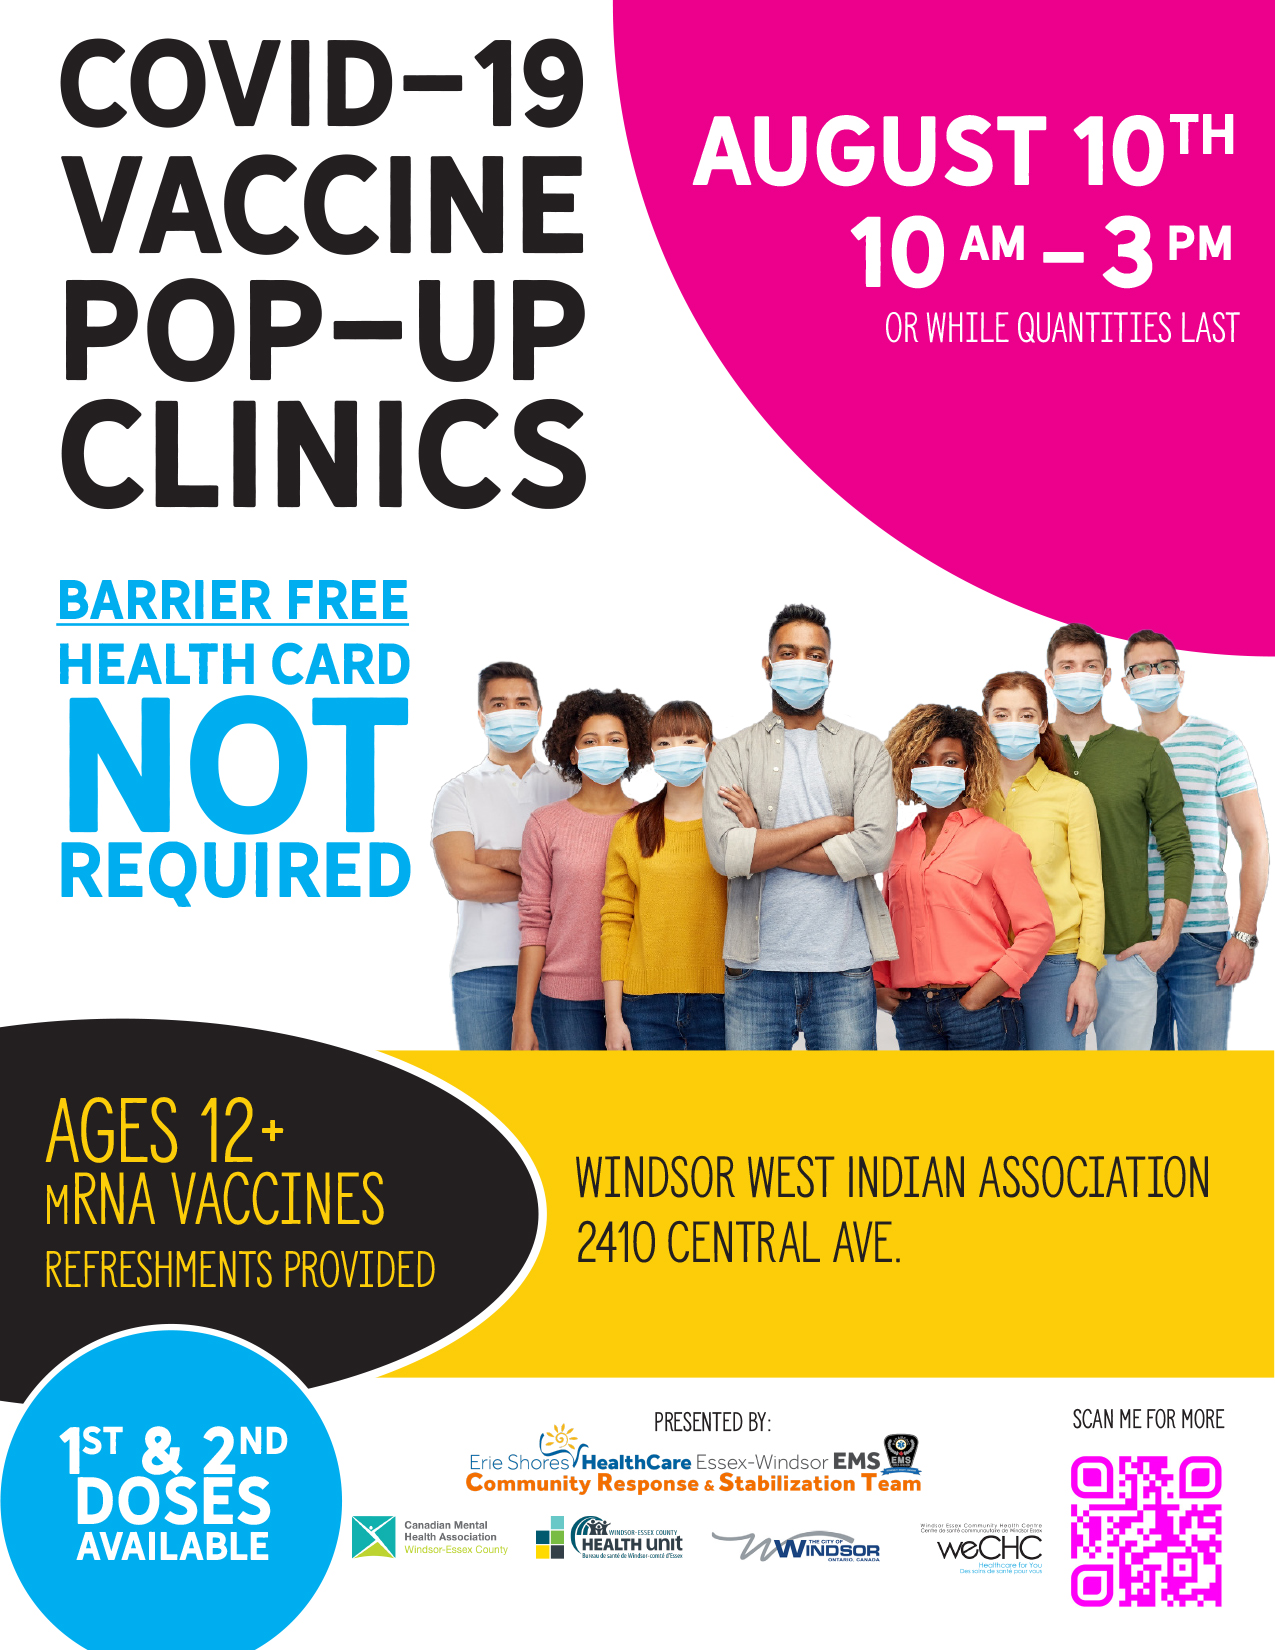 Vaccine pop-up clinic